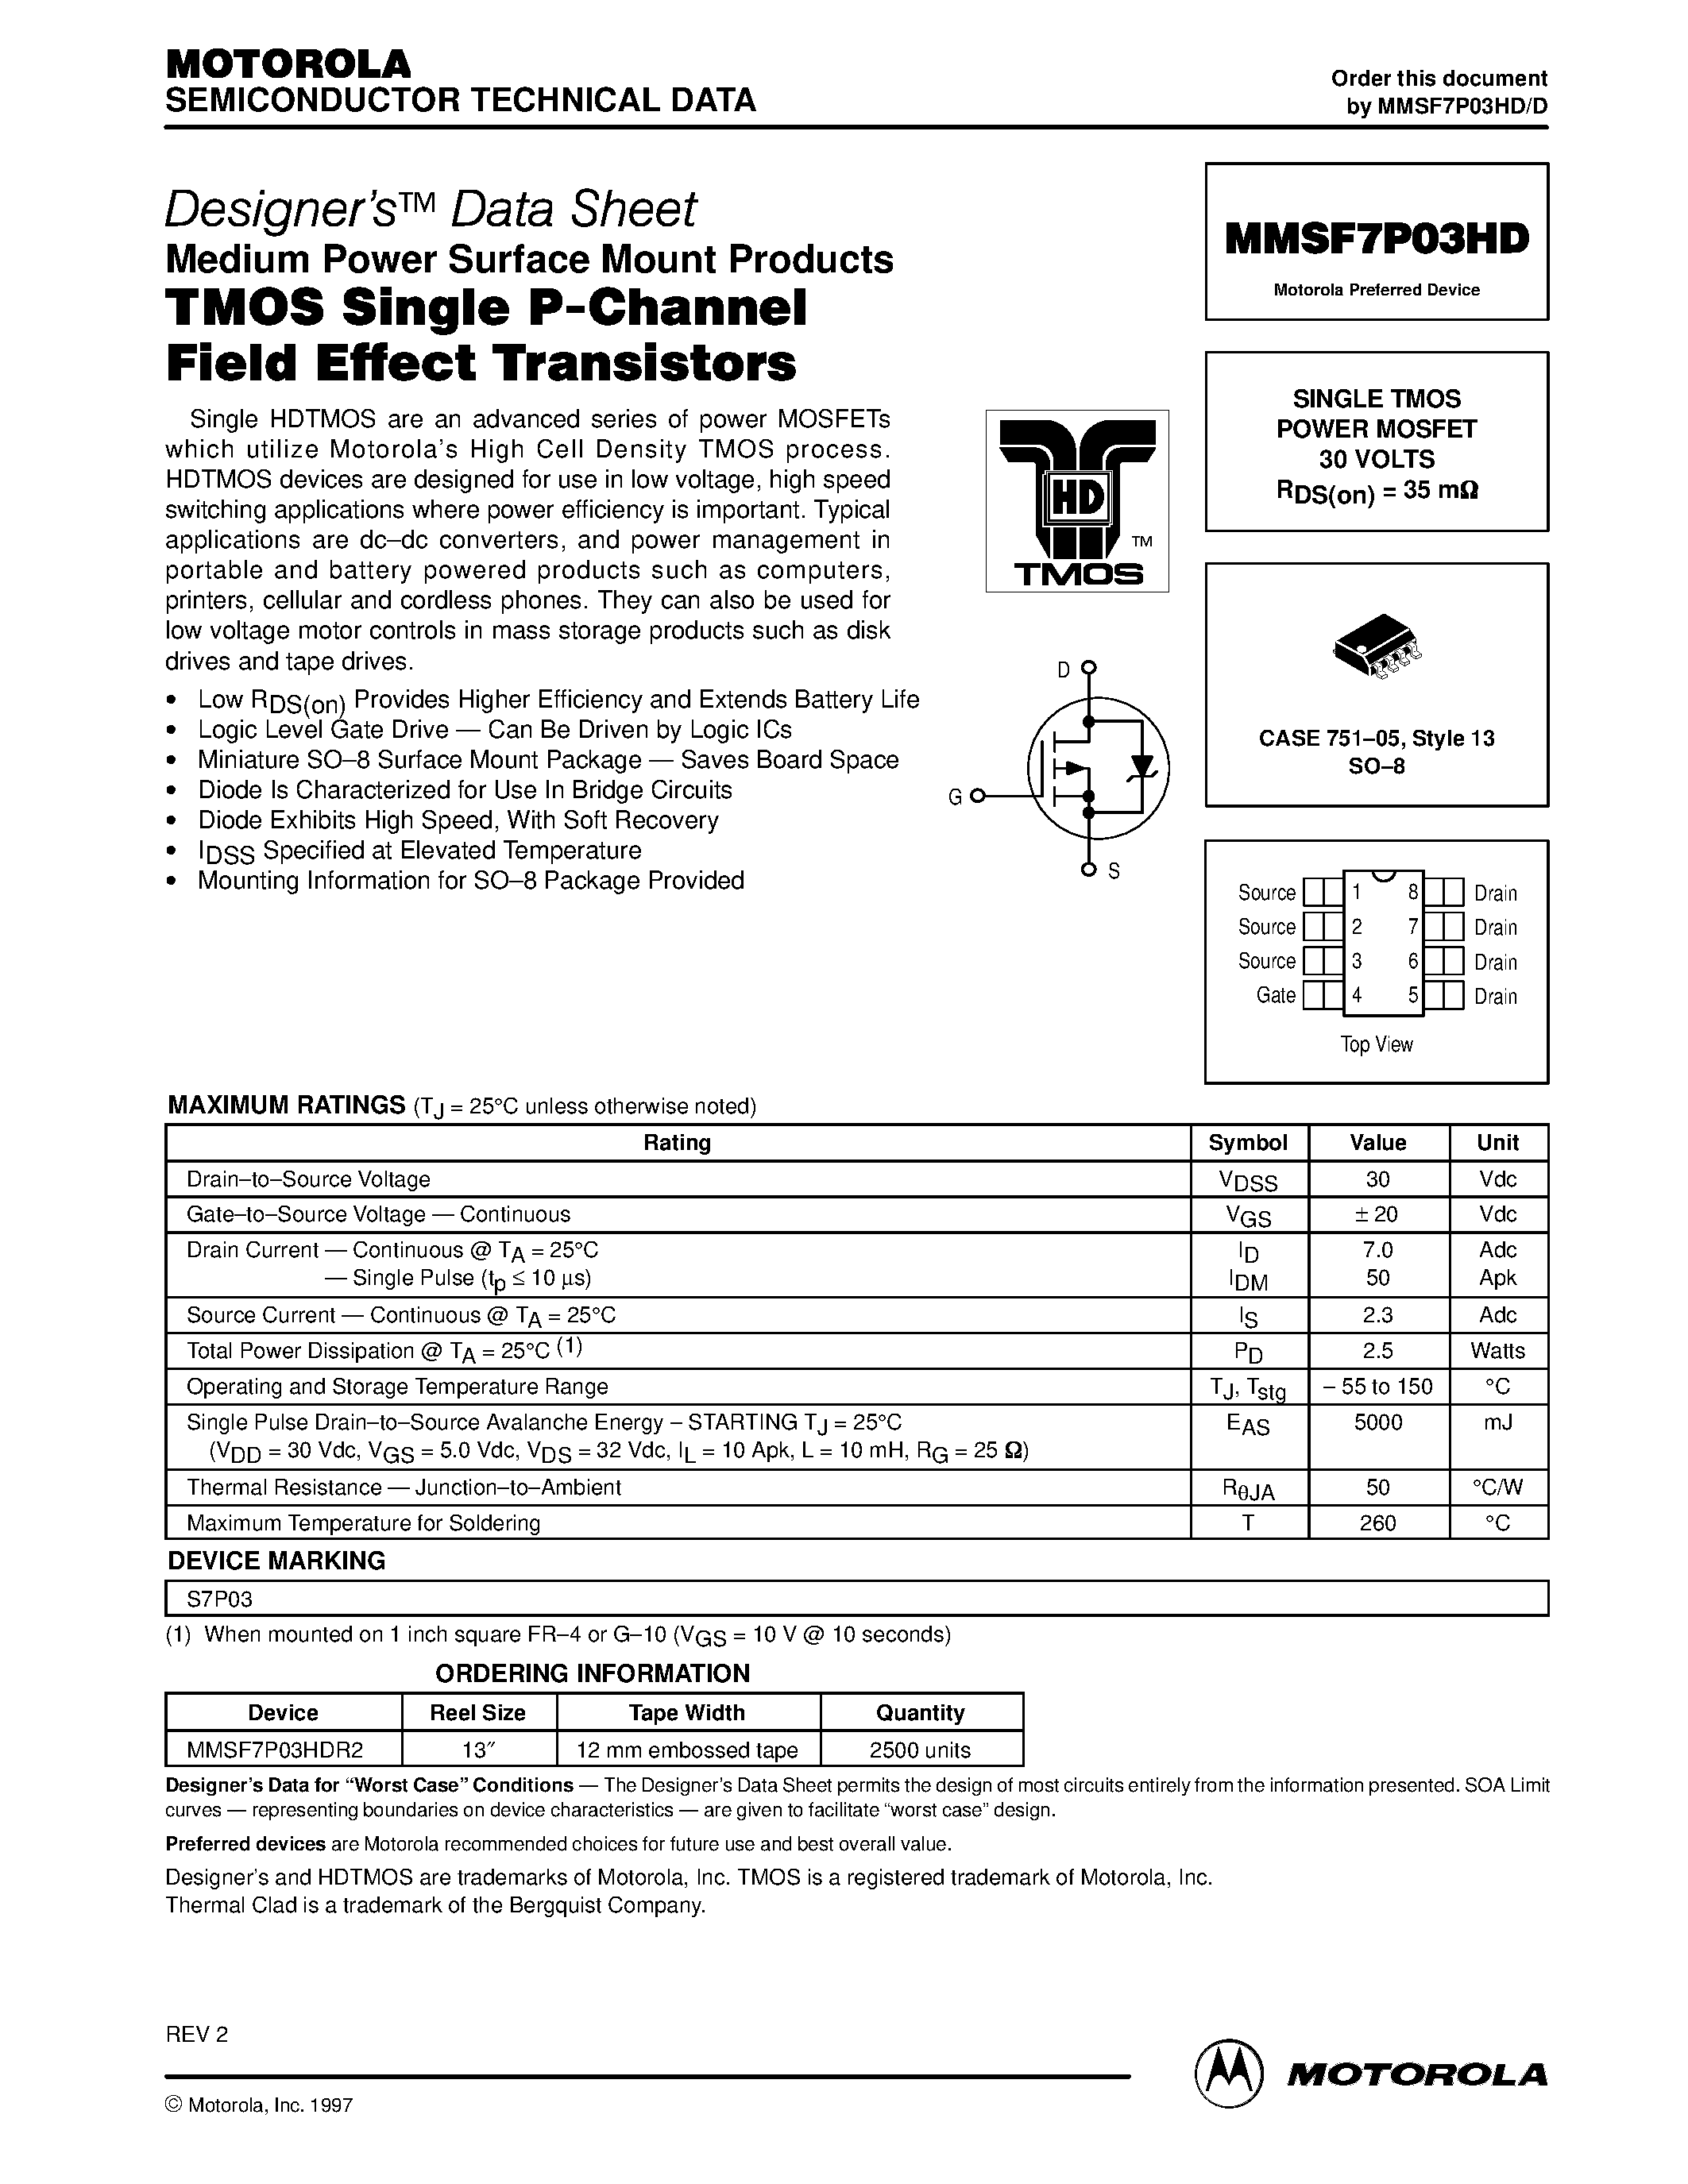 Datasheet MMSF7P03HD - SINGLE TMOS POWER MOSFET 30 VOLTS page 1